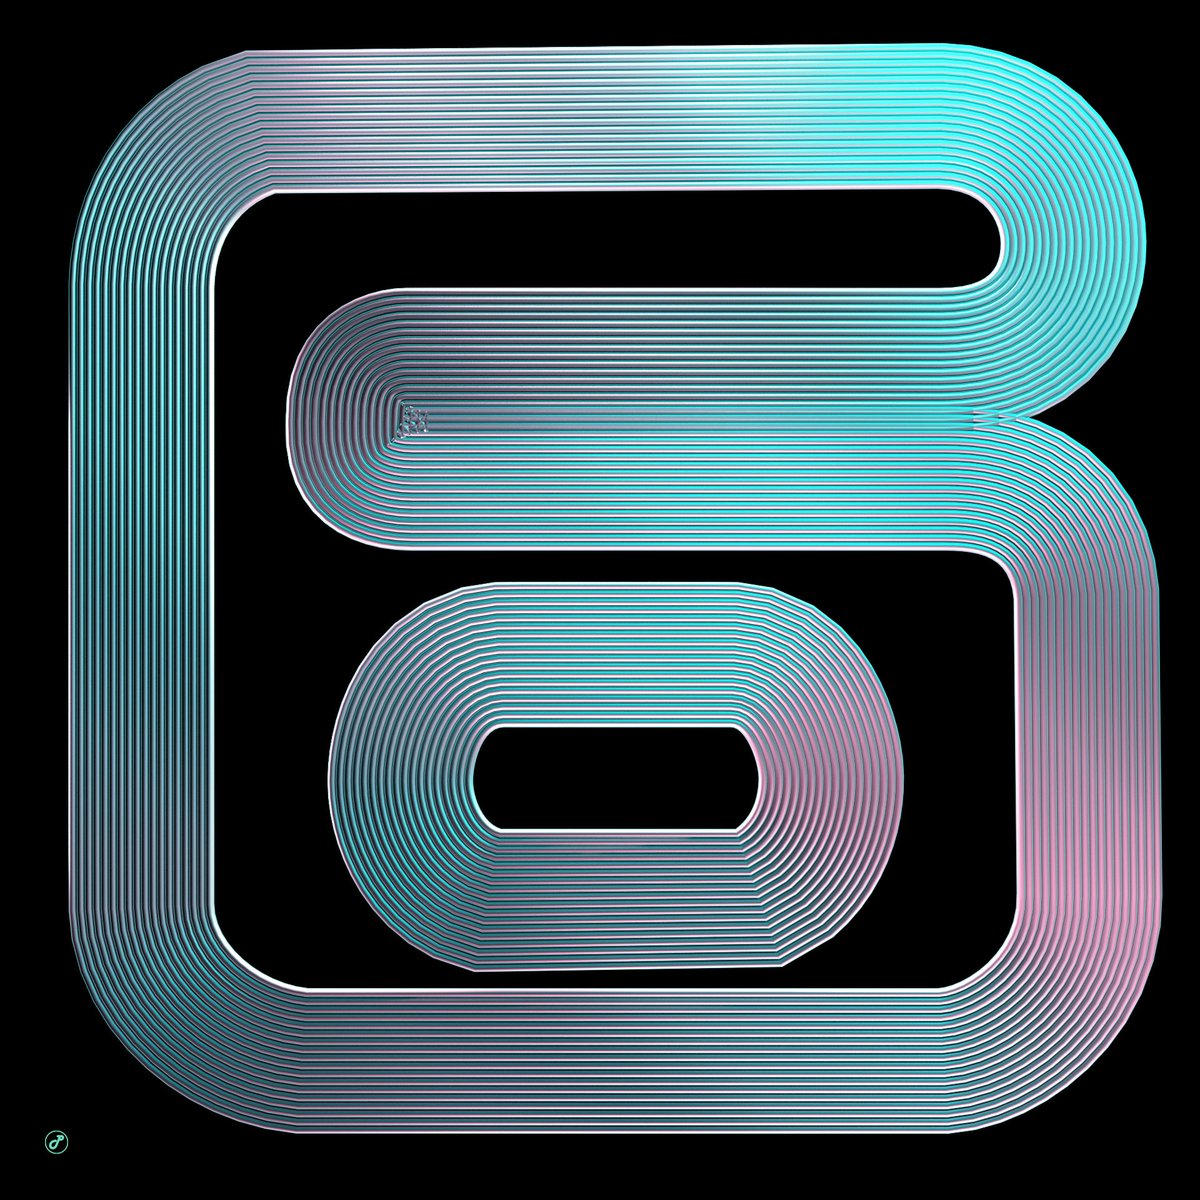 6 | Six
--
@36daysoftype
#36days_6 #36daysoftype
#36daysoftype10 #Typography #lettering #typedesign #pascall #graphicdesign #3dblendered #b3d #blender3d #design #blender #branding #myfont #typeface #logo #icon #goodtype #logoinspiration #36days_6 #six